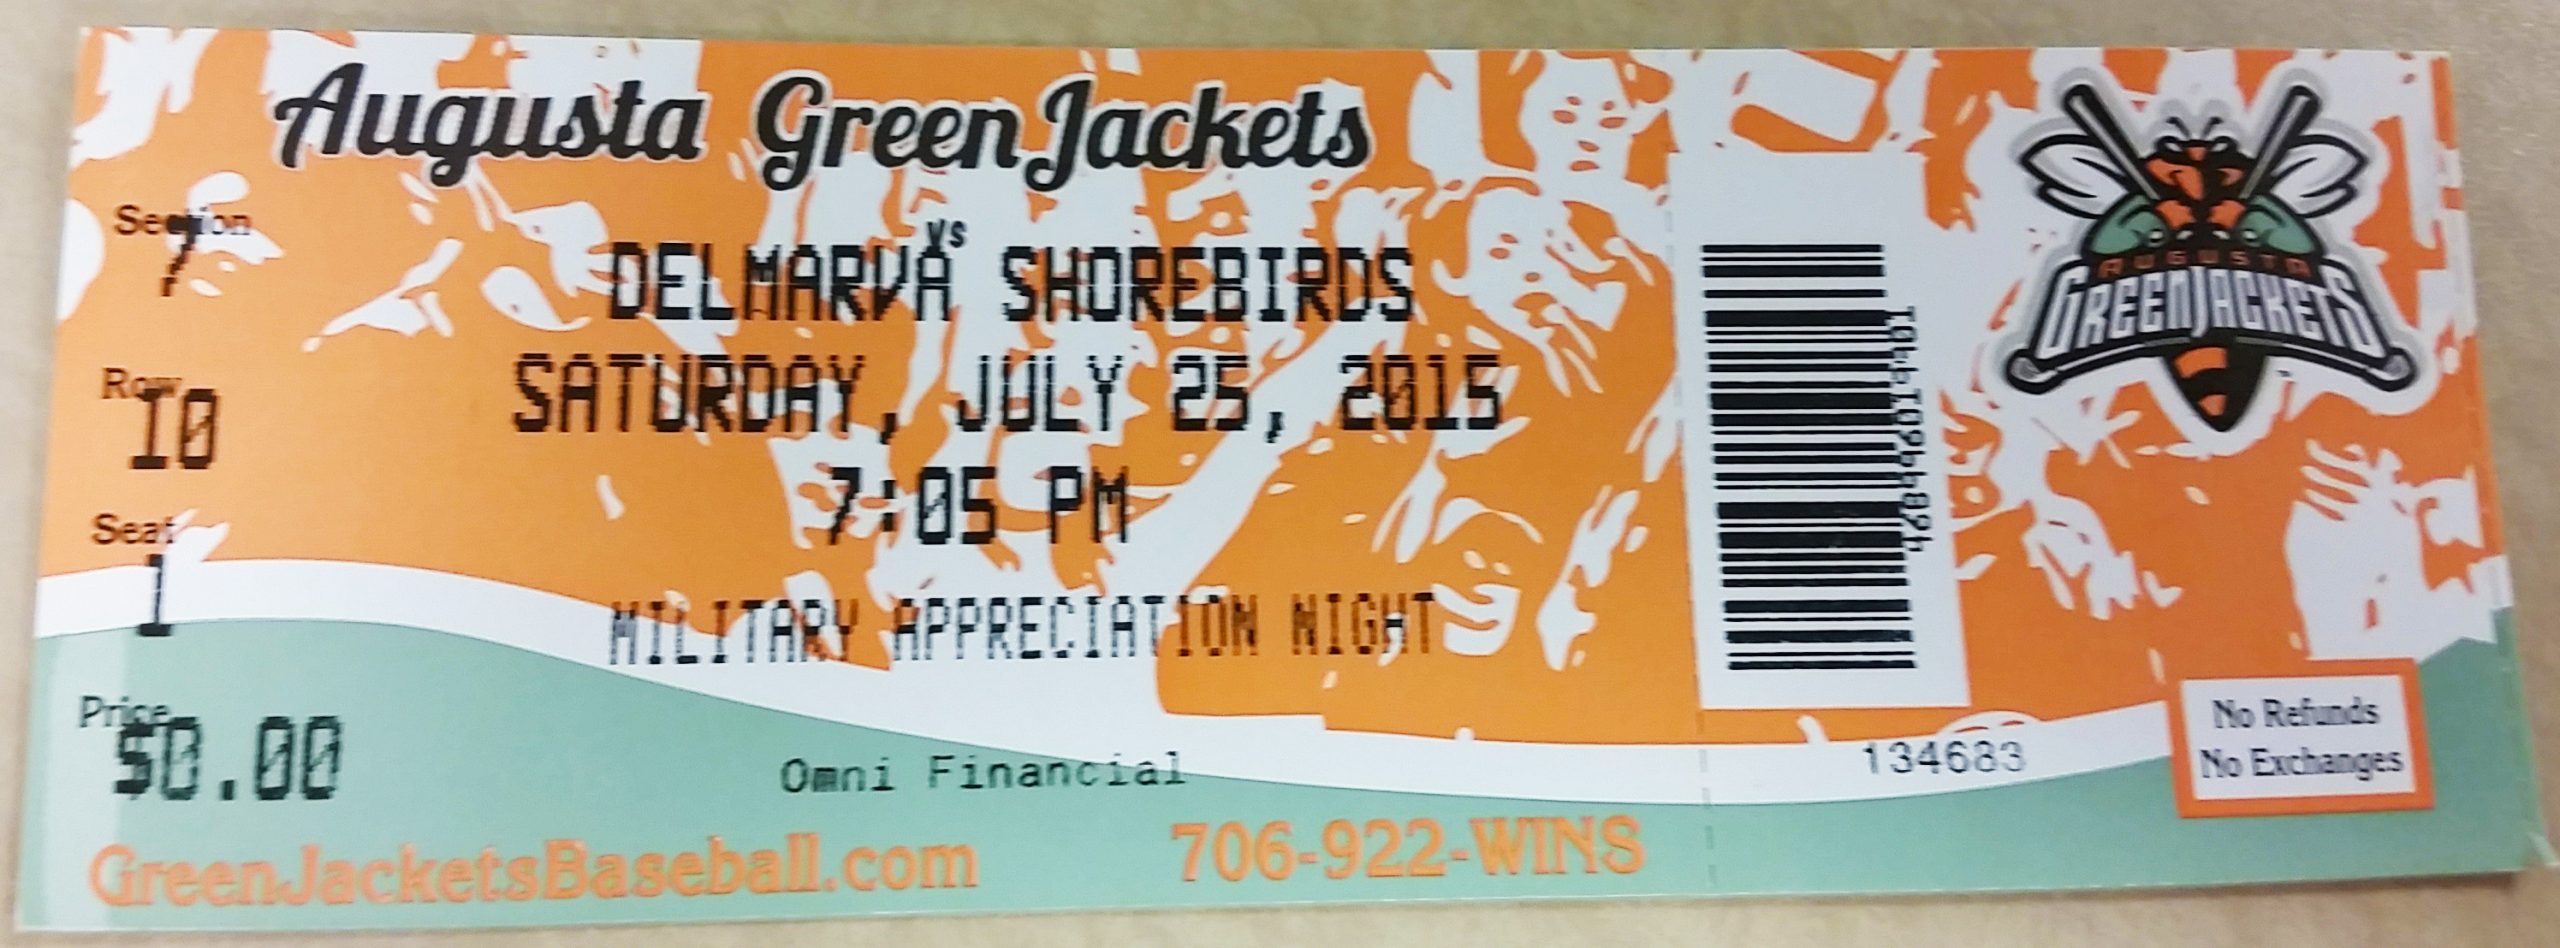 Augusta Green Jackets OMNI Tickets 2015.pdf